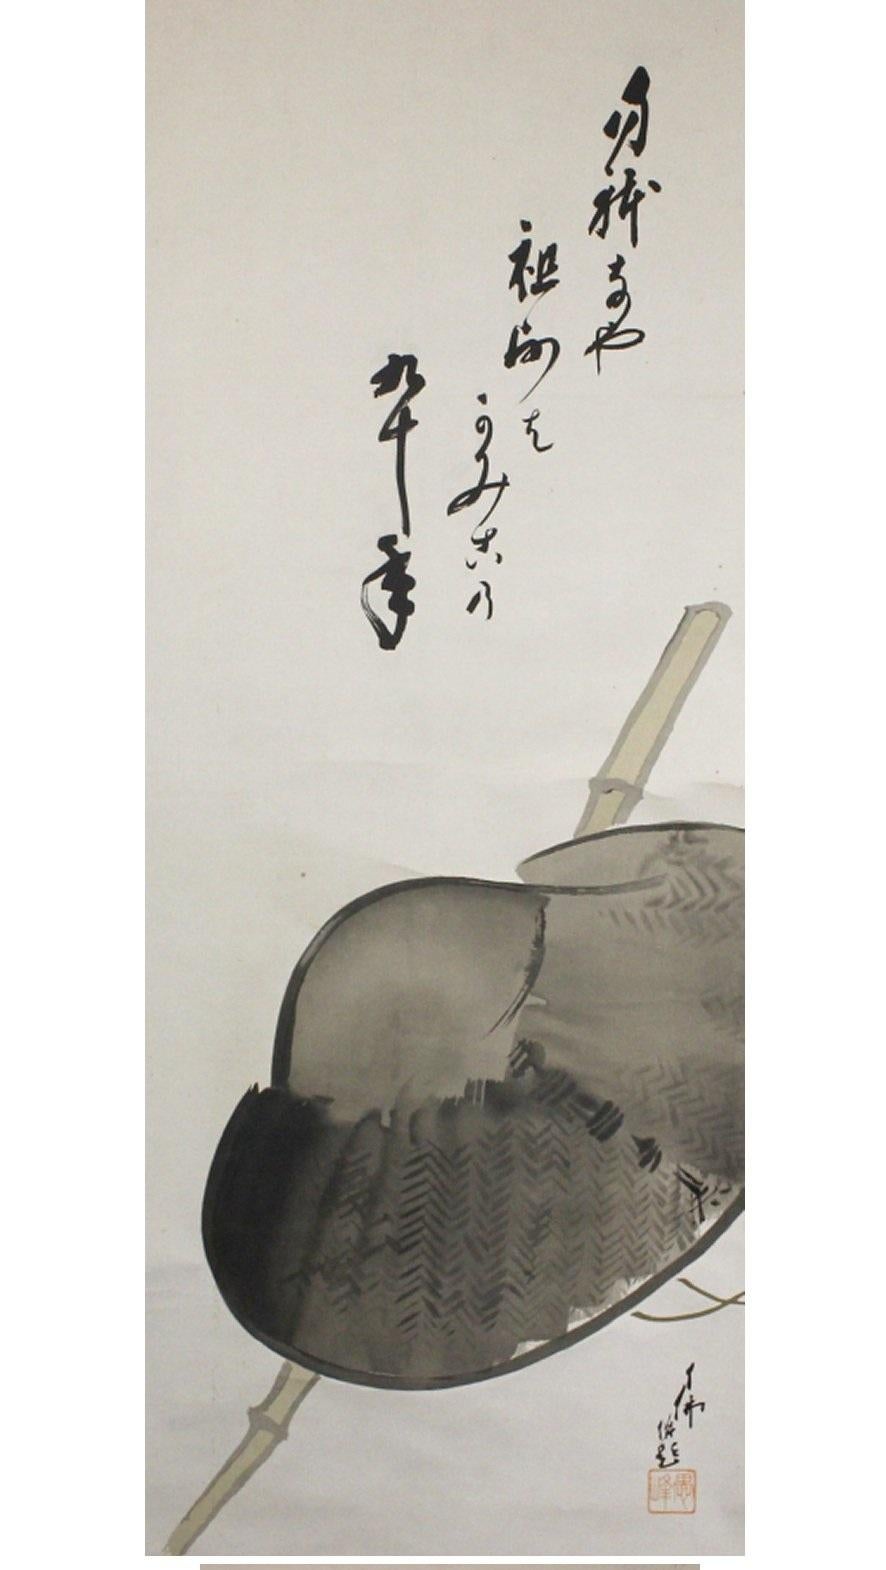 [Otani Kubutsu]
1875-1943, a monk of the Otani school of the Shinshu sect (23rd head of Higashi Honganji Temple) during the Meiji-Showa period.
Dharma name: Shonyo. Literary name: Kōen.
Number: Gumine. Haiku name: Kubutsu.
The second son of Gennyo